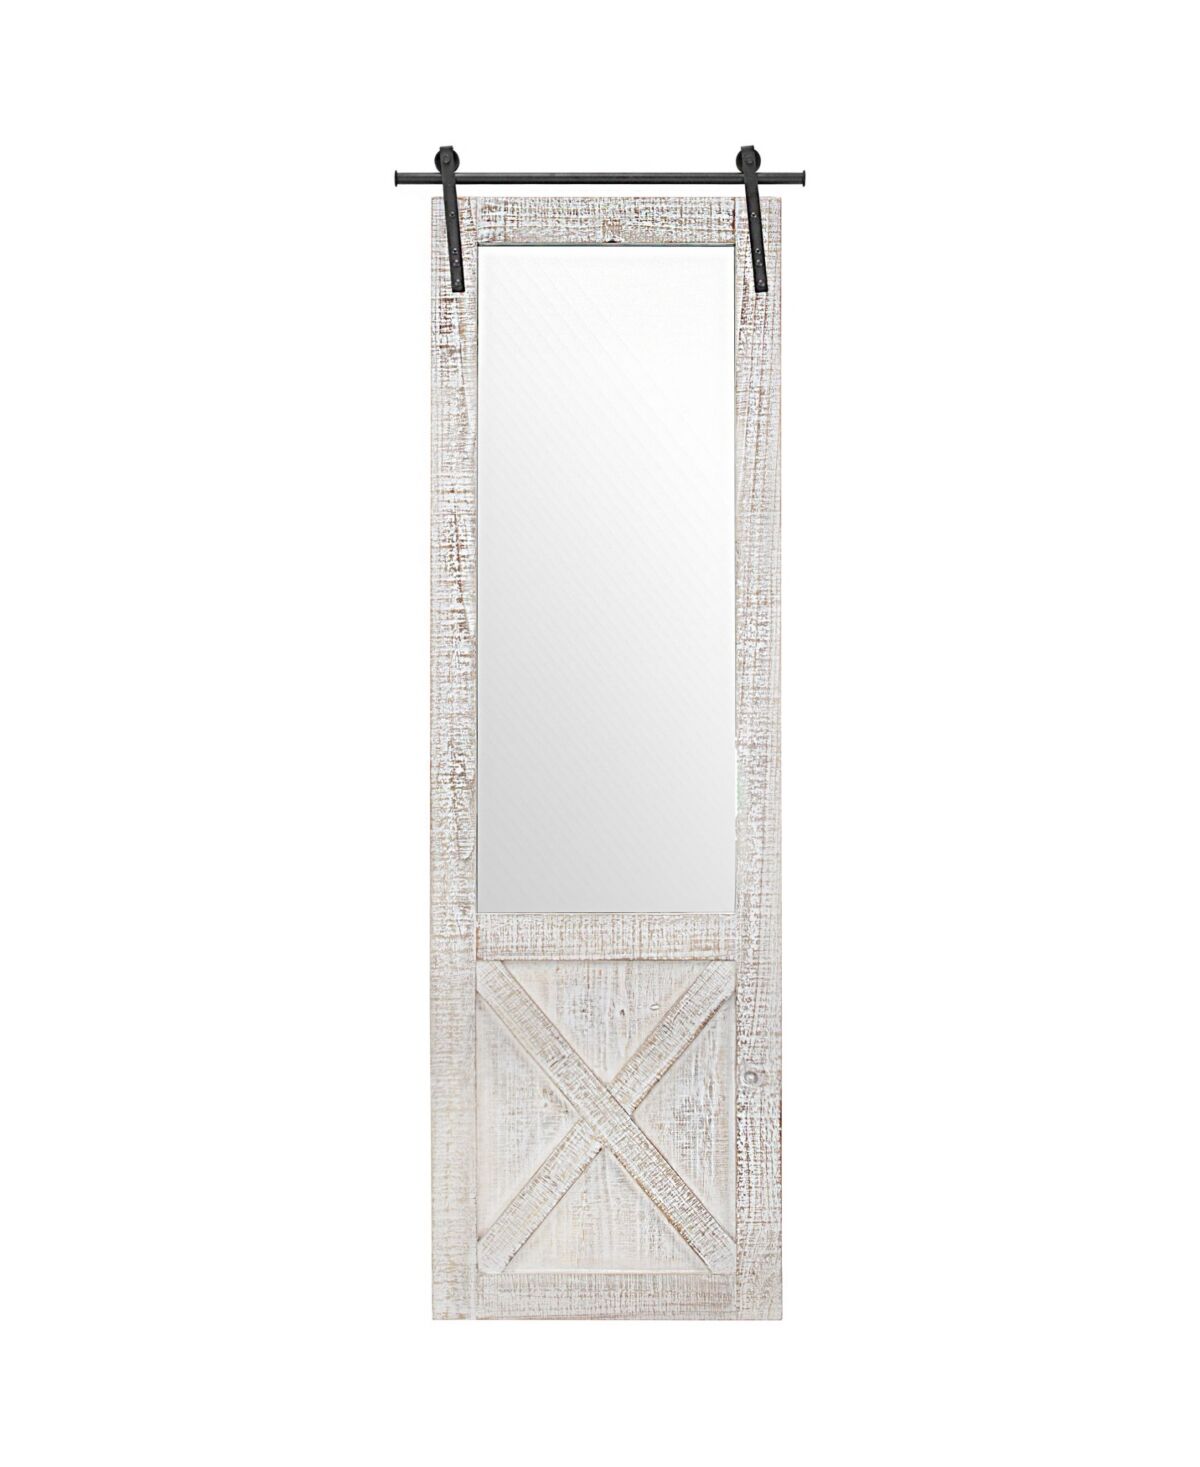 Crystal Art Gallery American Art Decor Wood Hanging Barn Door Wall Mirror - Off-white